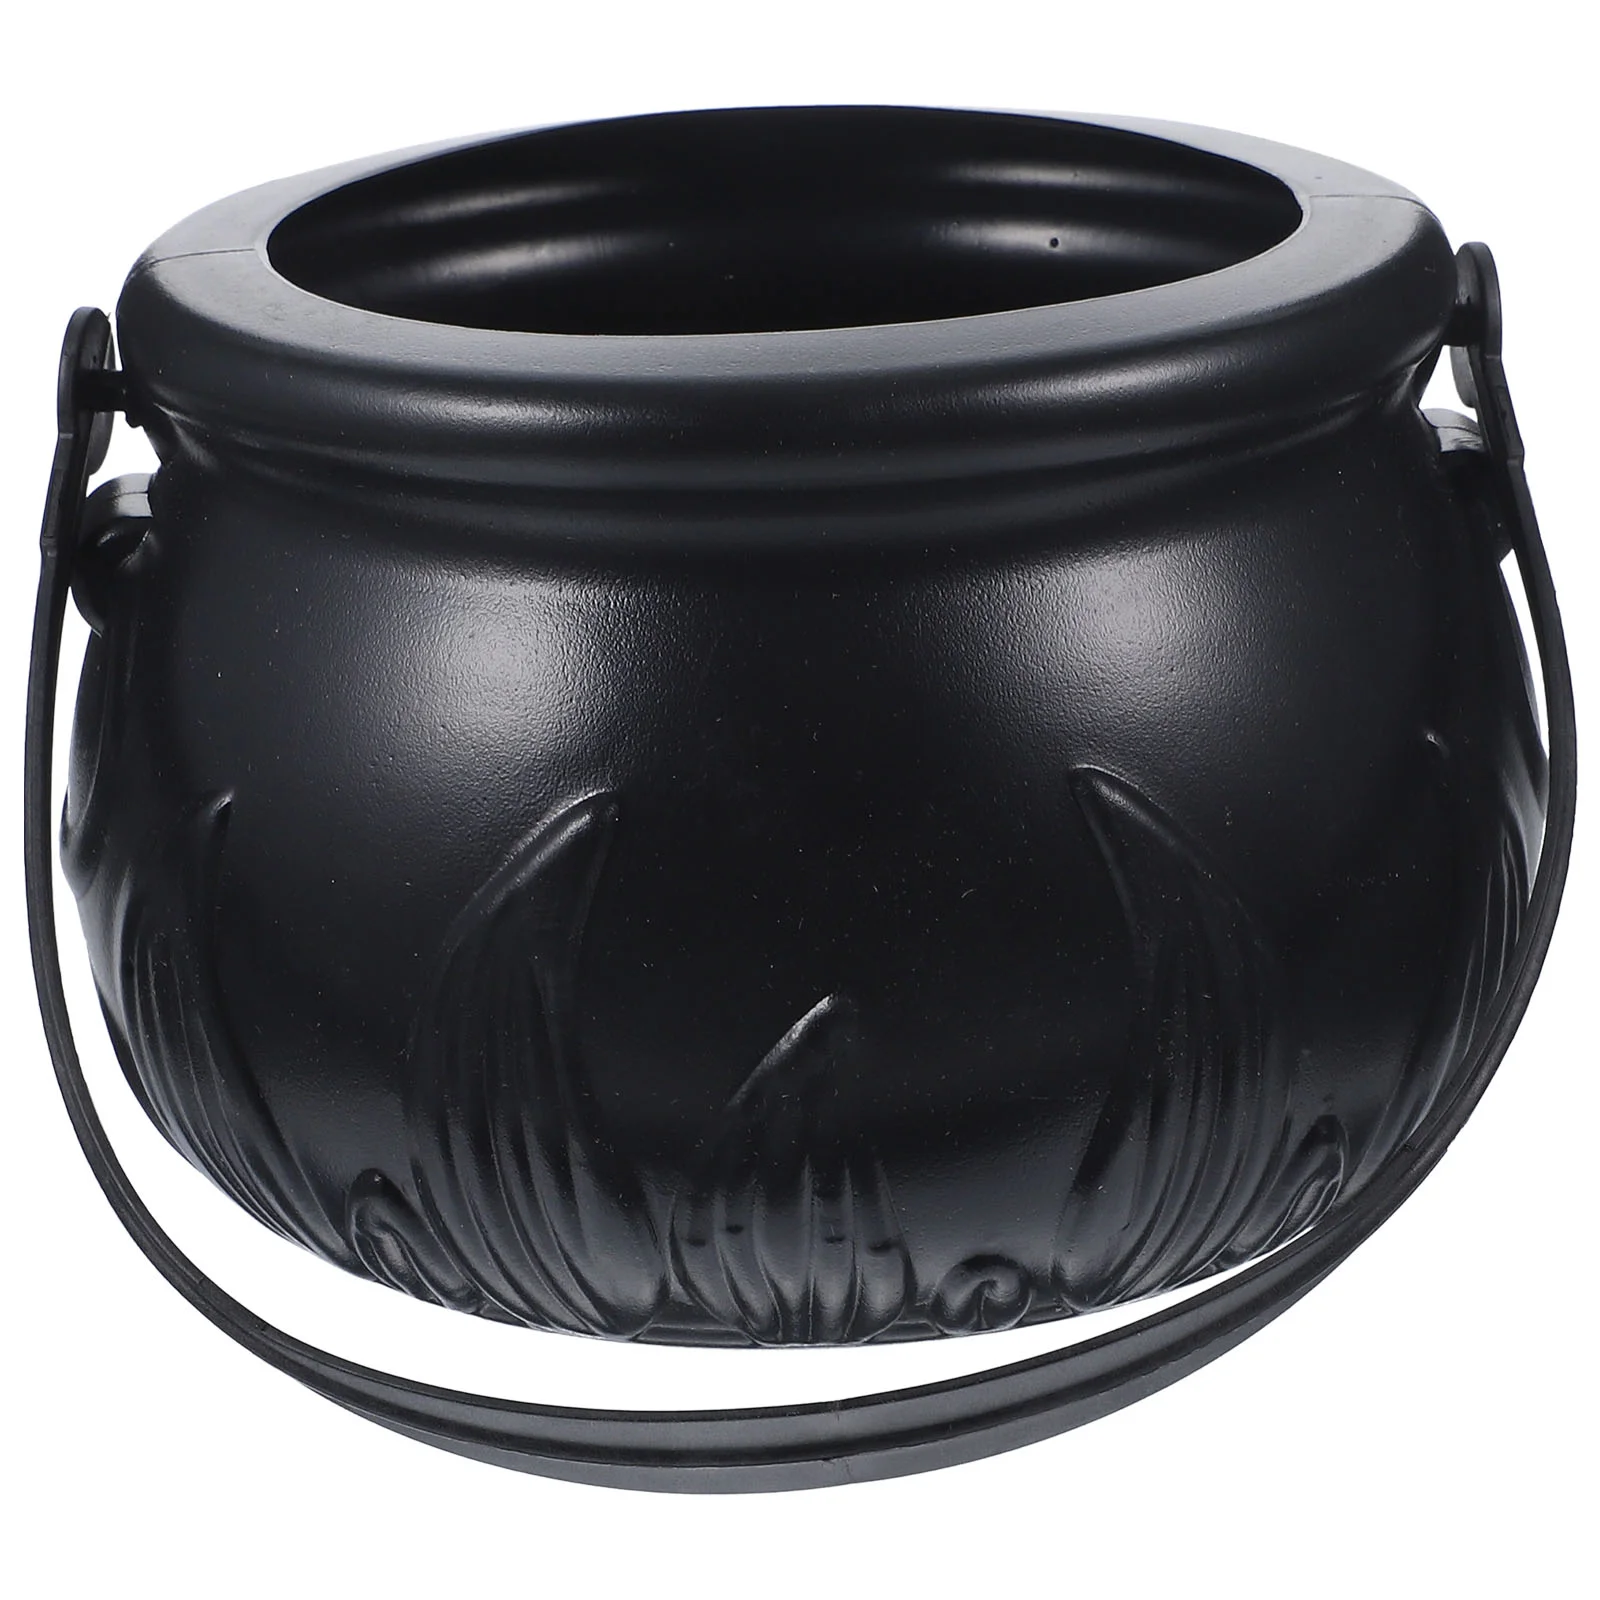 

Candy Cauldron Halloween Bucket Witch Basket Plastic Treat Black Pot Bowl Kettle Trick Pumpkin Holder Or Goodie Photo Costume